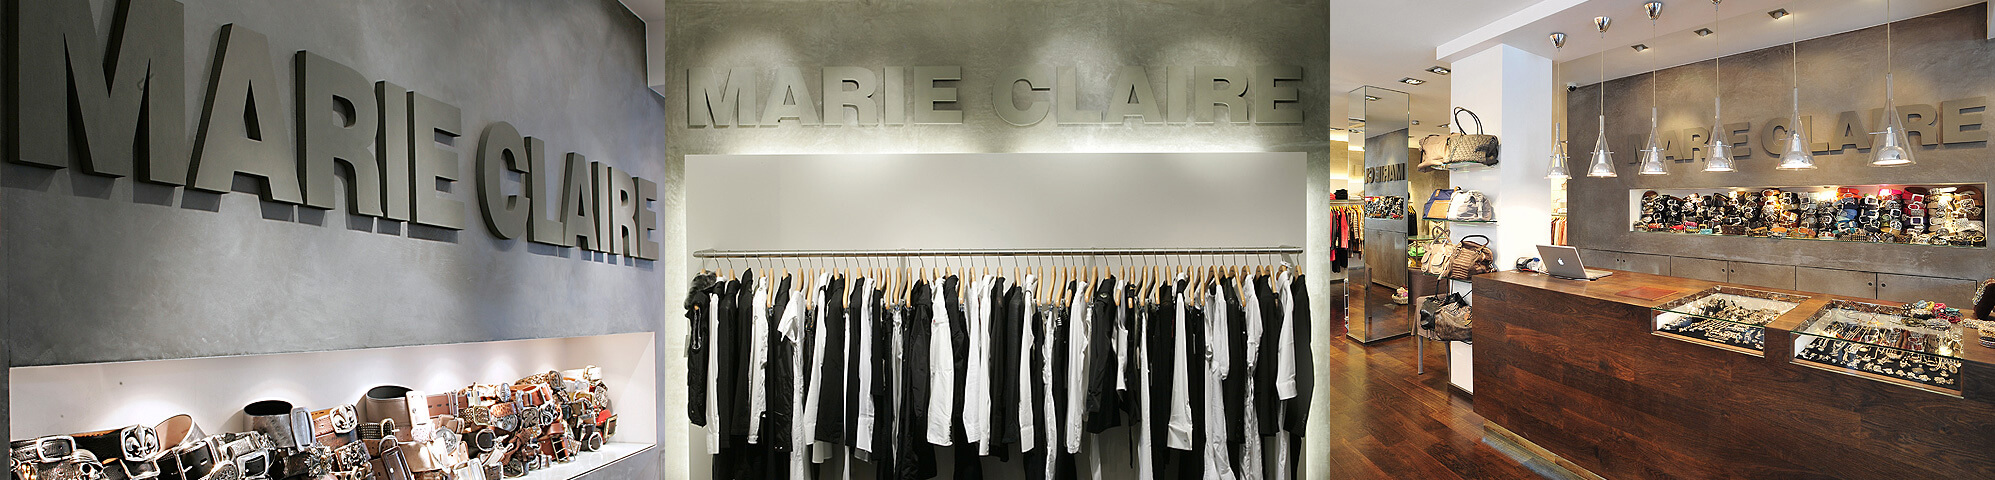 Marie Claire Fashion, Mönchengladbach